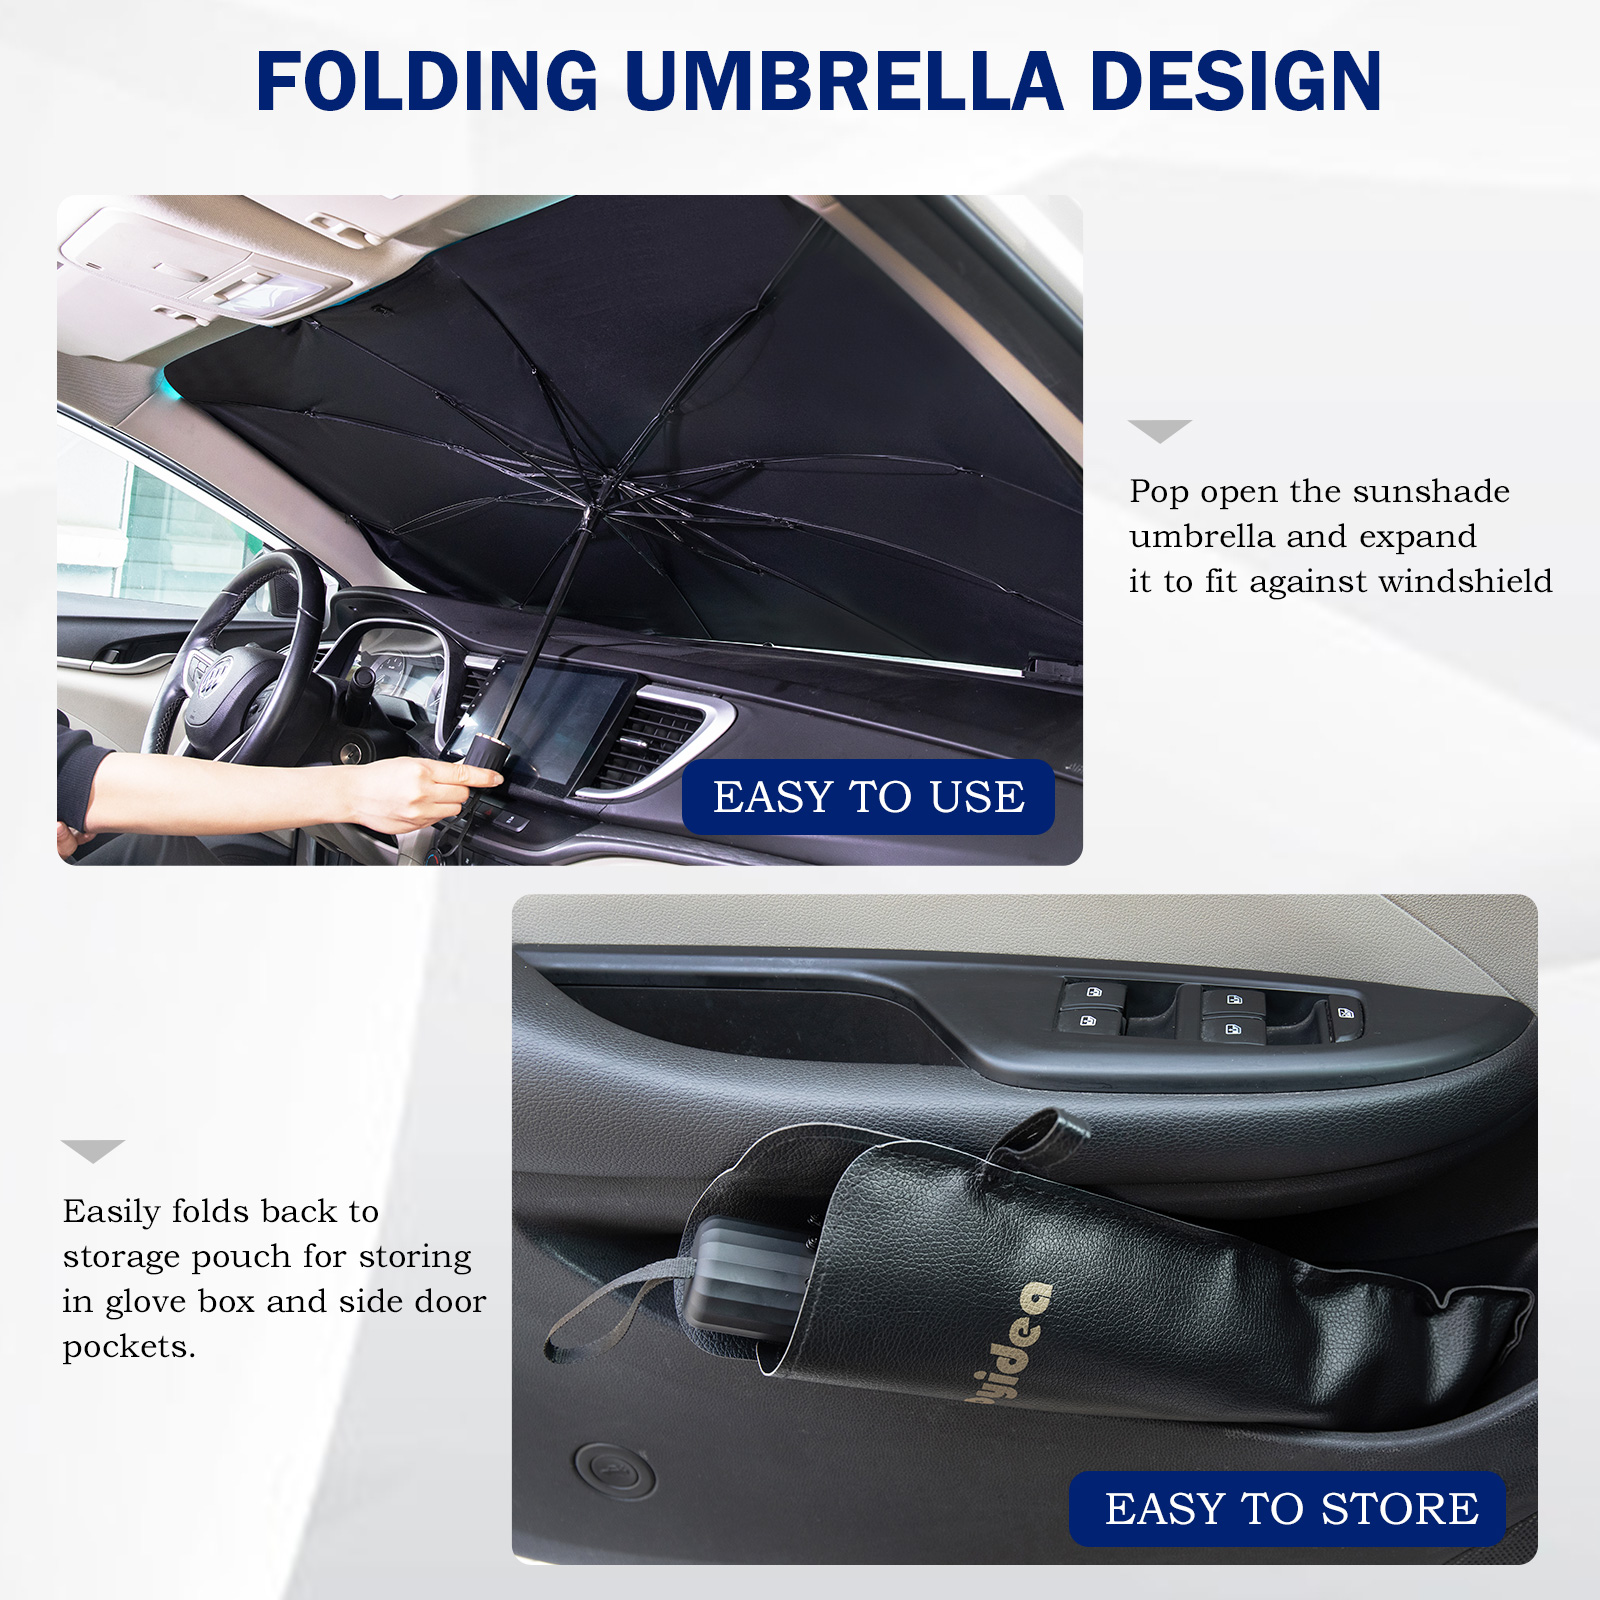 Windshield Sun Shade Foldable Umbrella Reflective Sunshade for Car Front Window Blocks UV Rays Heat Keep Vehicle Cool, Fits Most Vans SUVs (57 x 31 in)